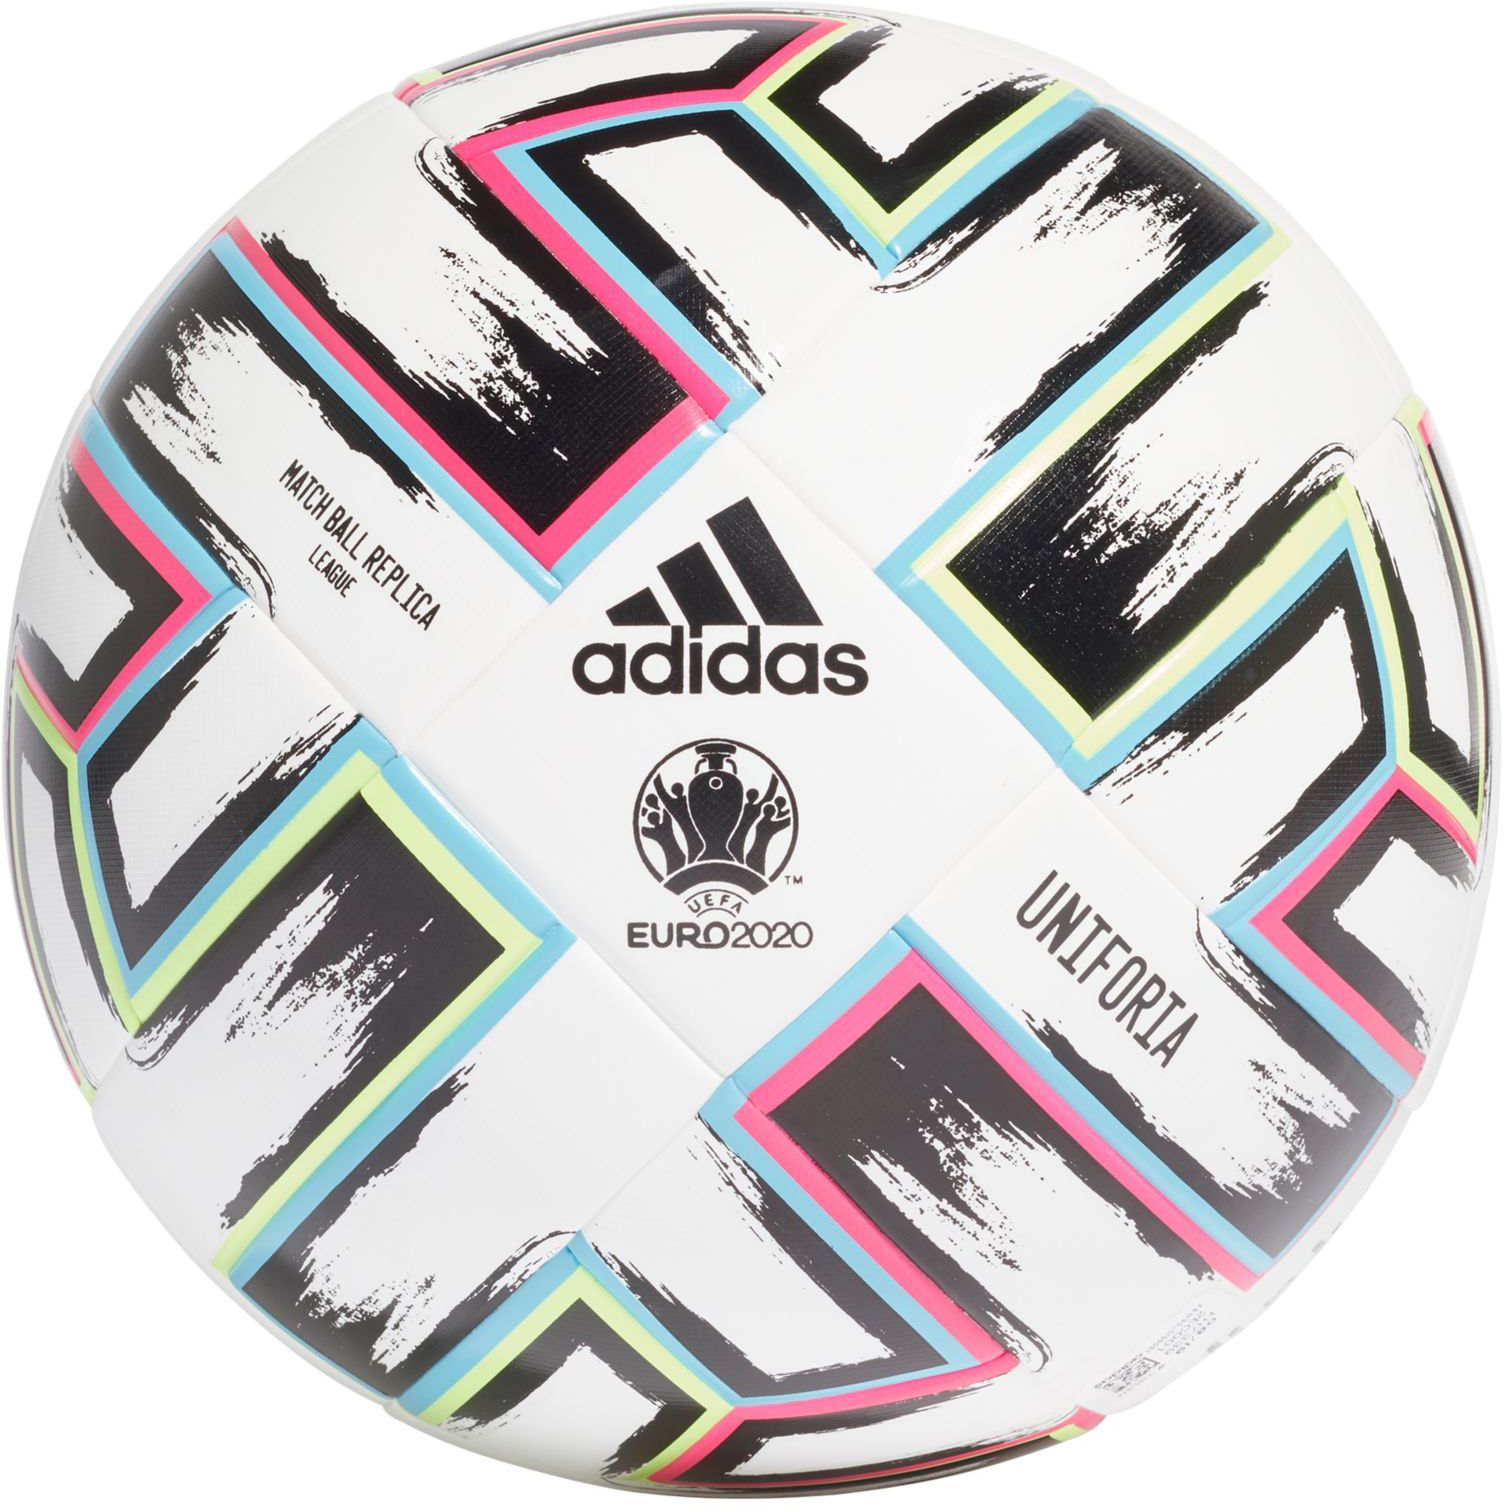 adidas soccer ball